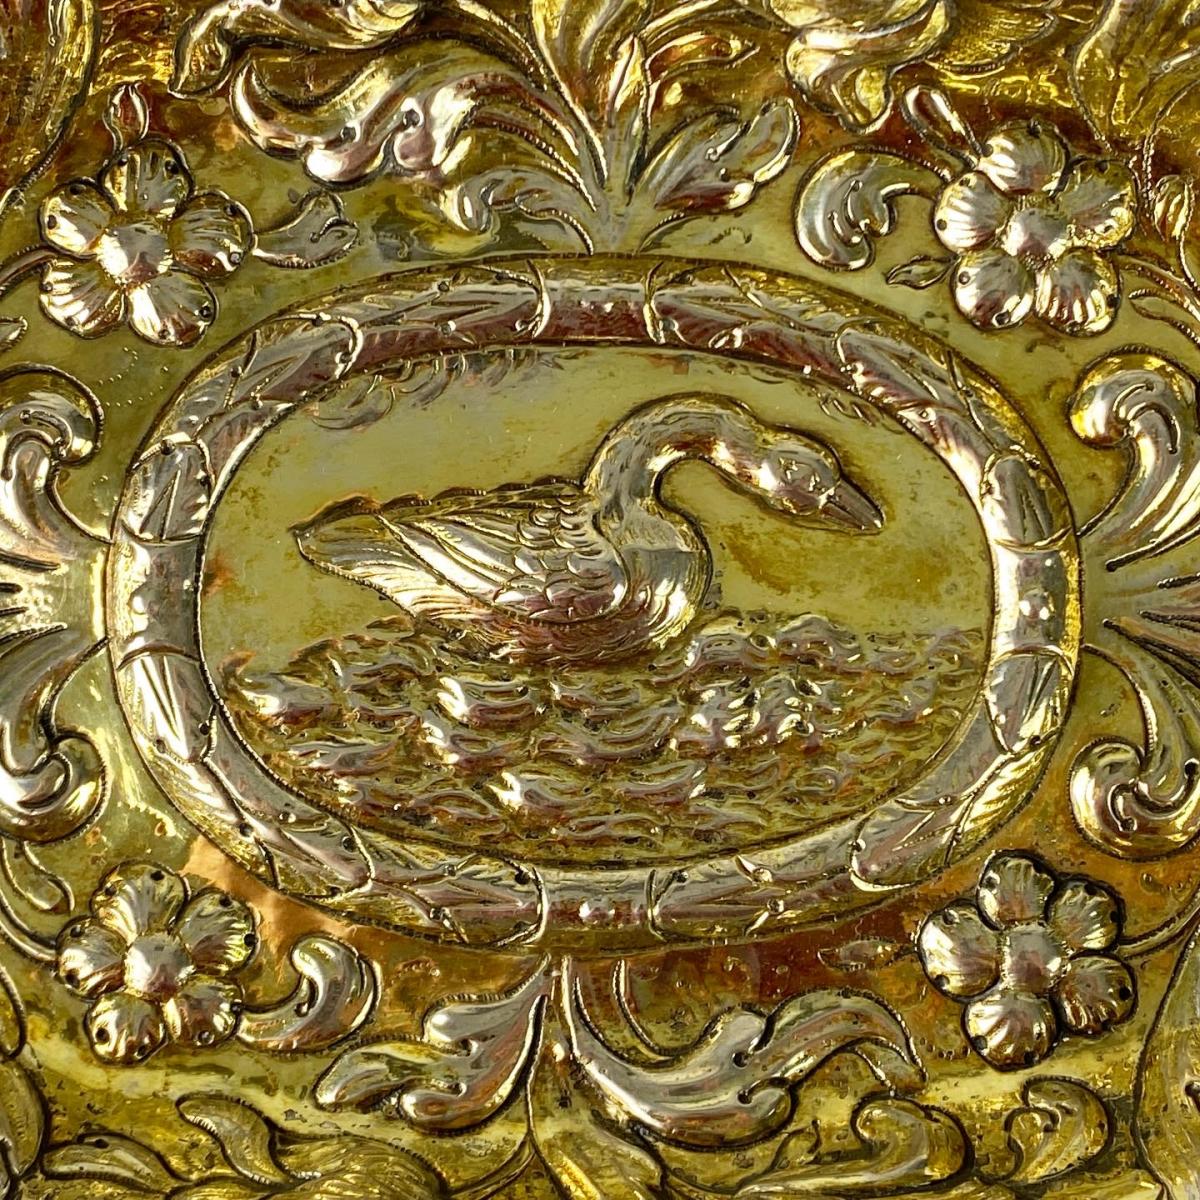 Repoussé silver gilt sweetmeat dish. German, late 17th century